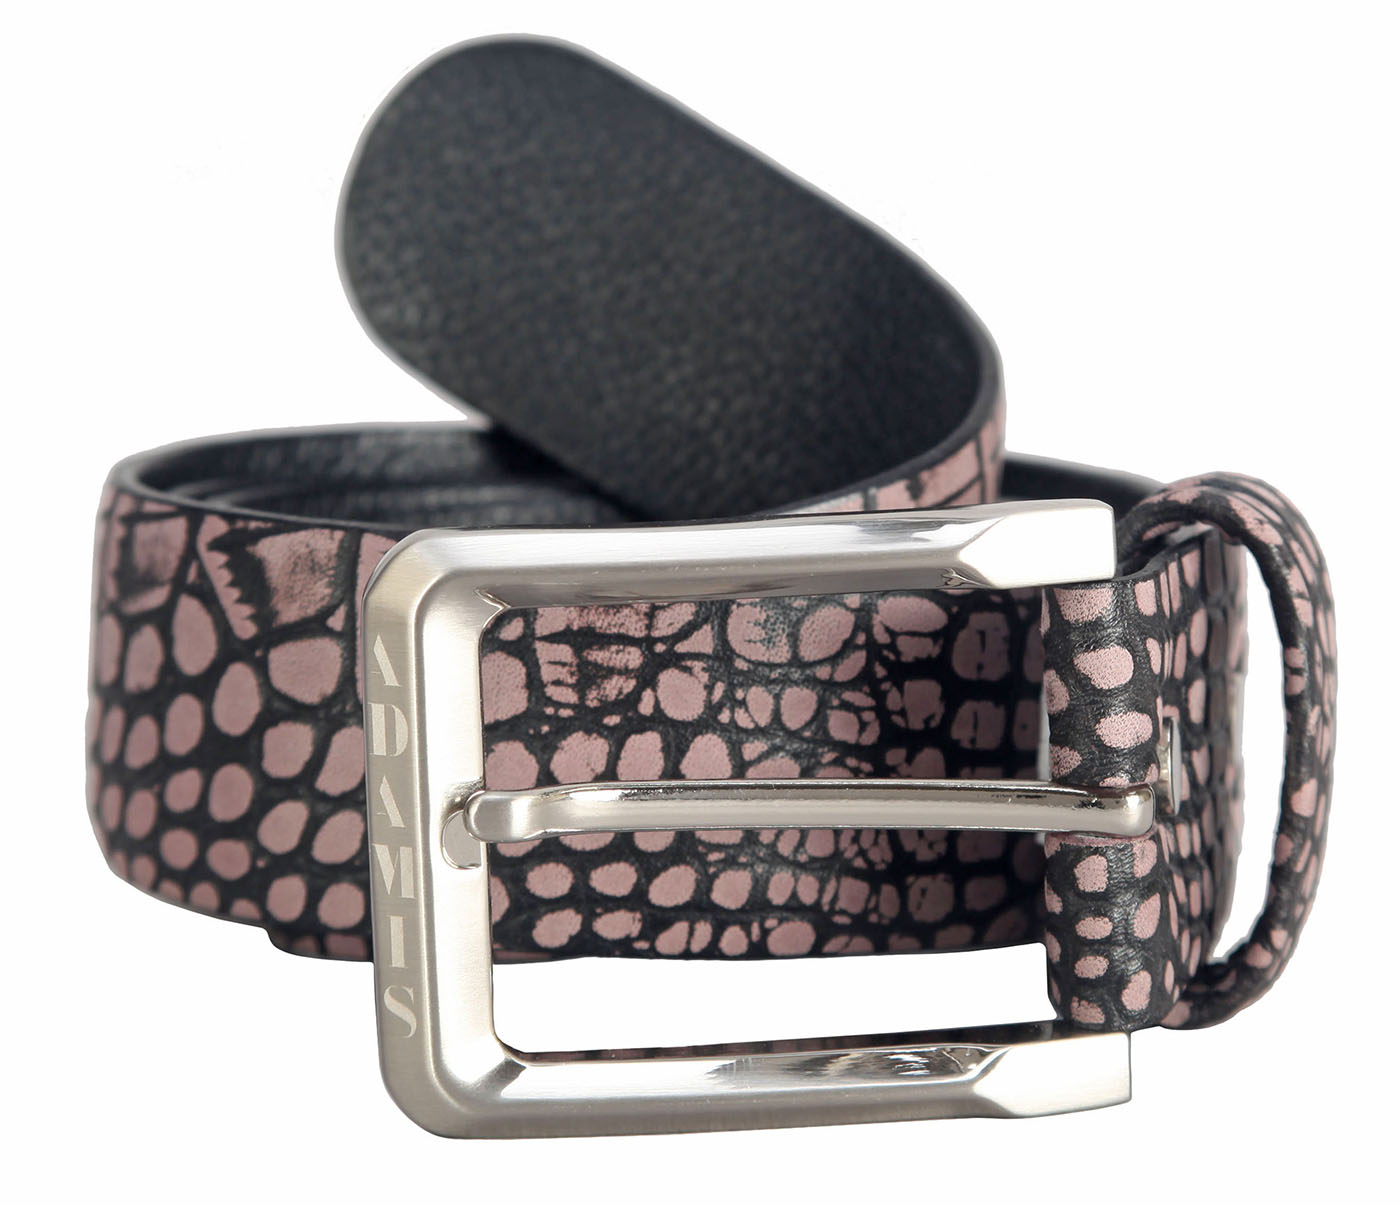 BL149--Men's stylish Casual wear belt in Genuine Leather - Brown.